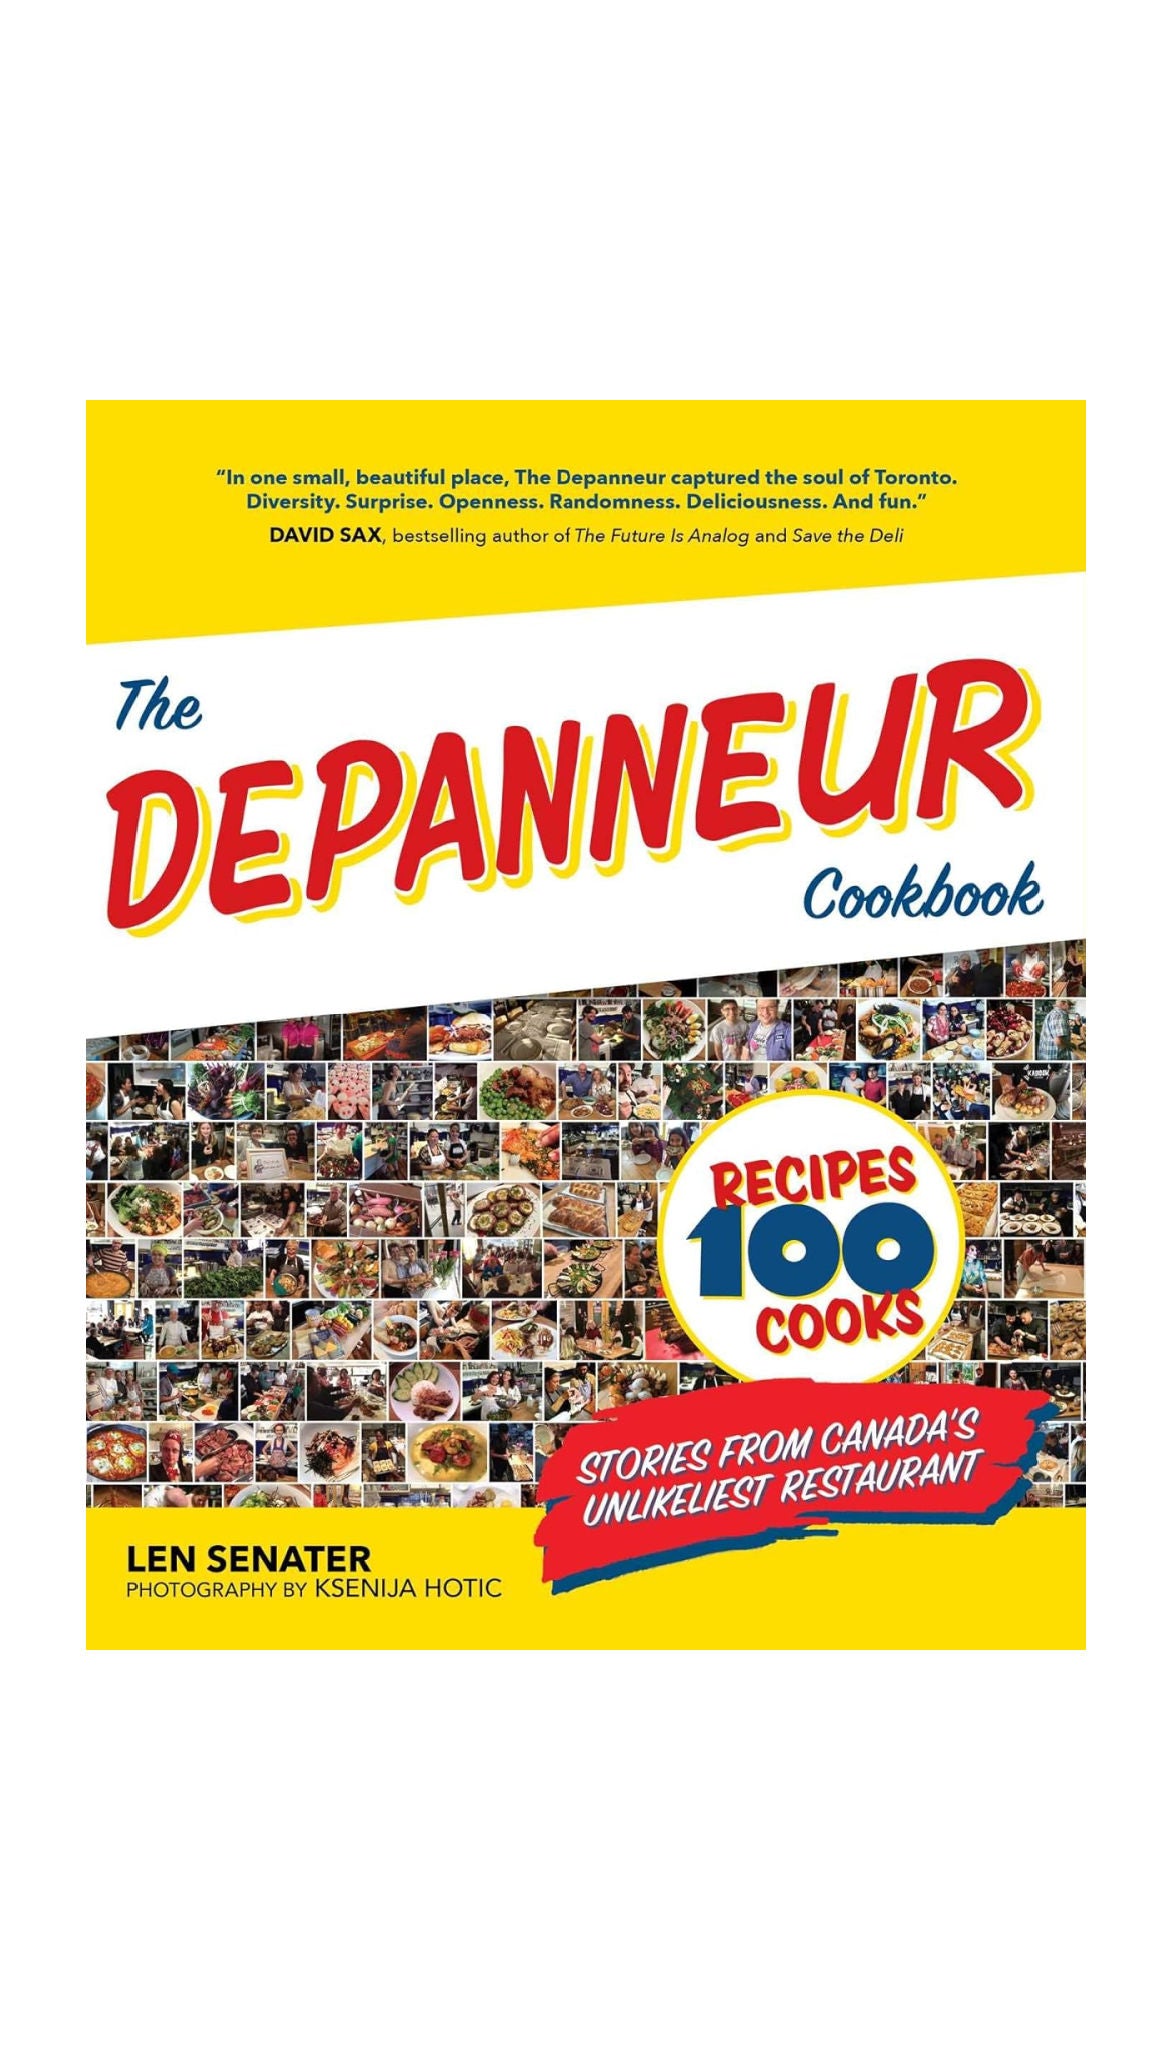 The Depanneur Cookbook